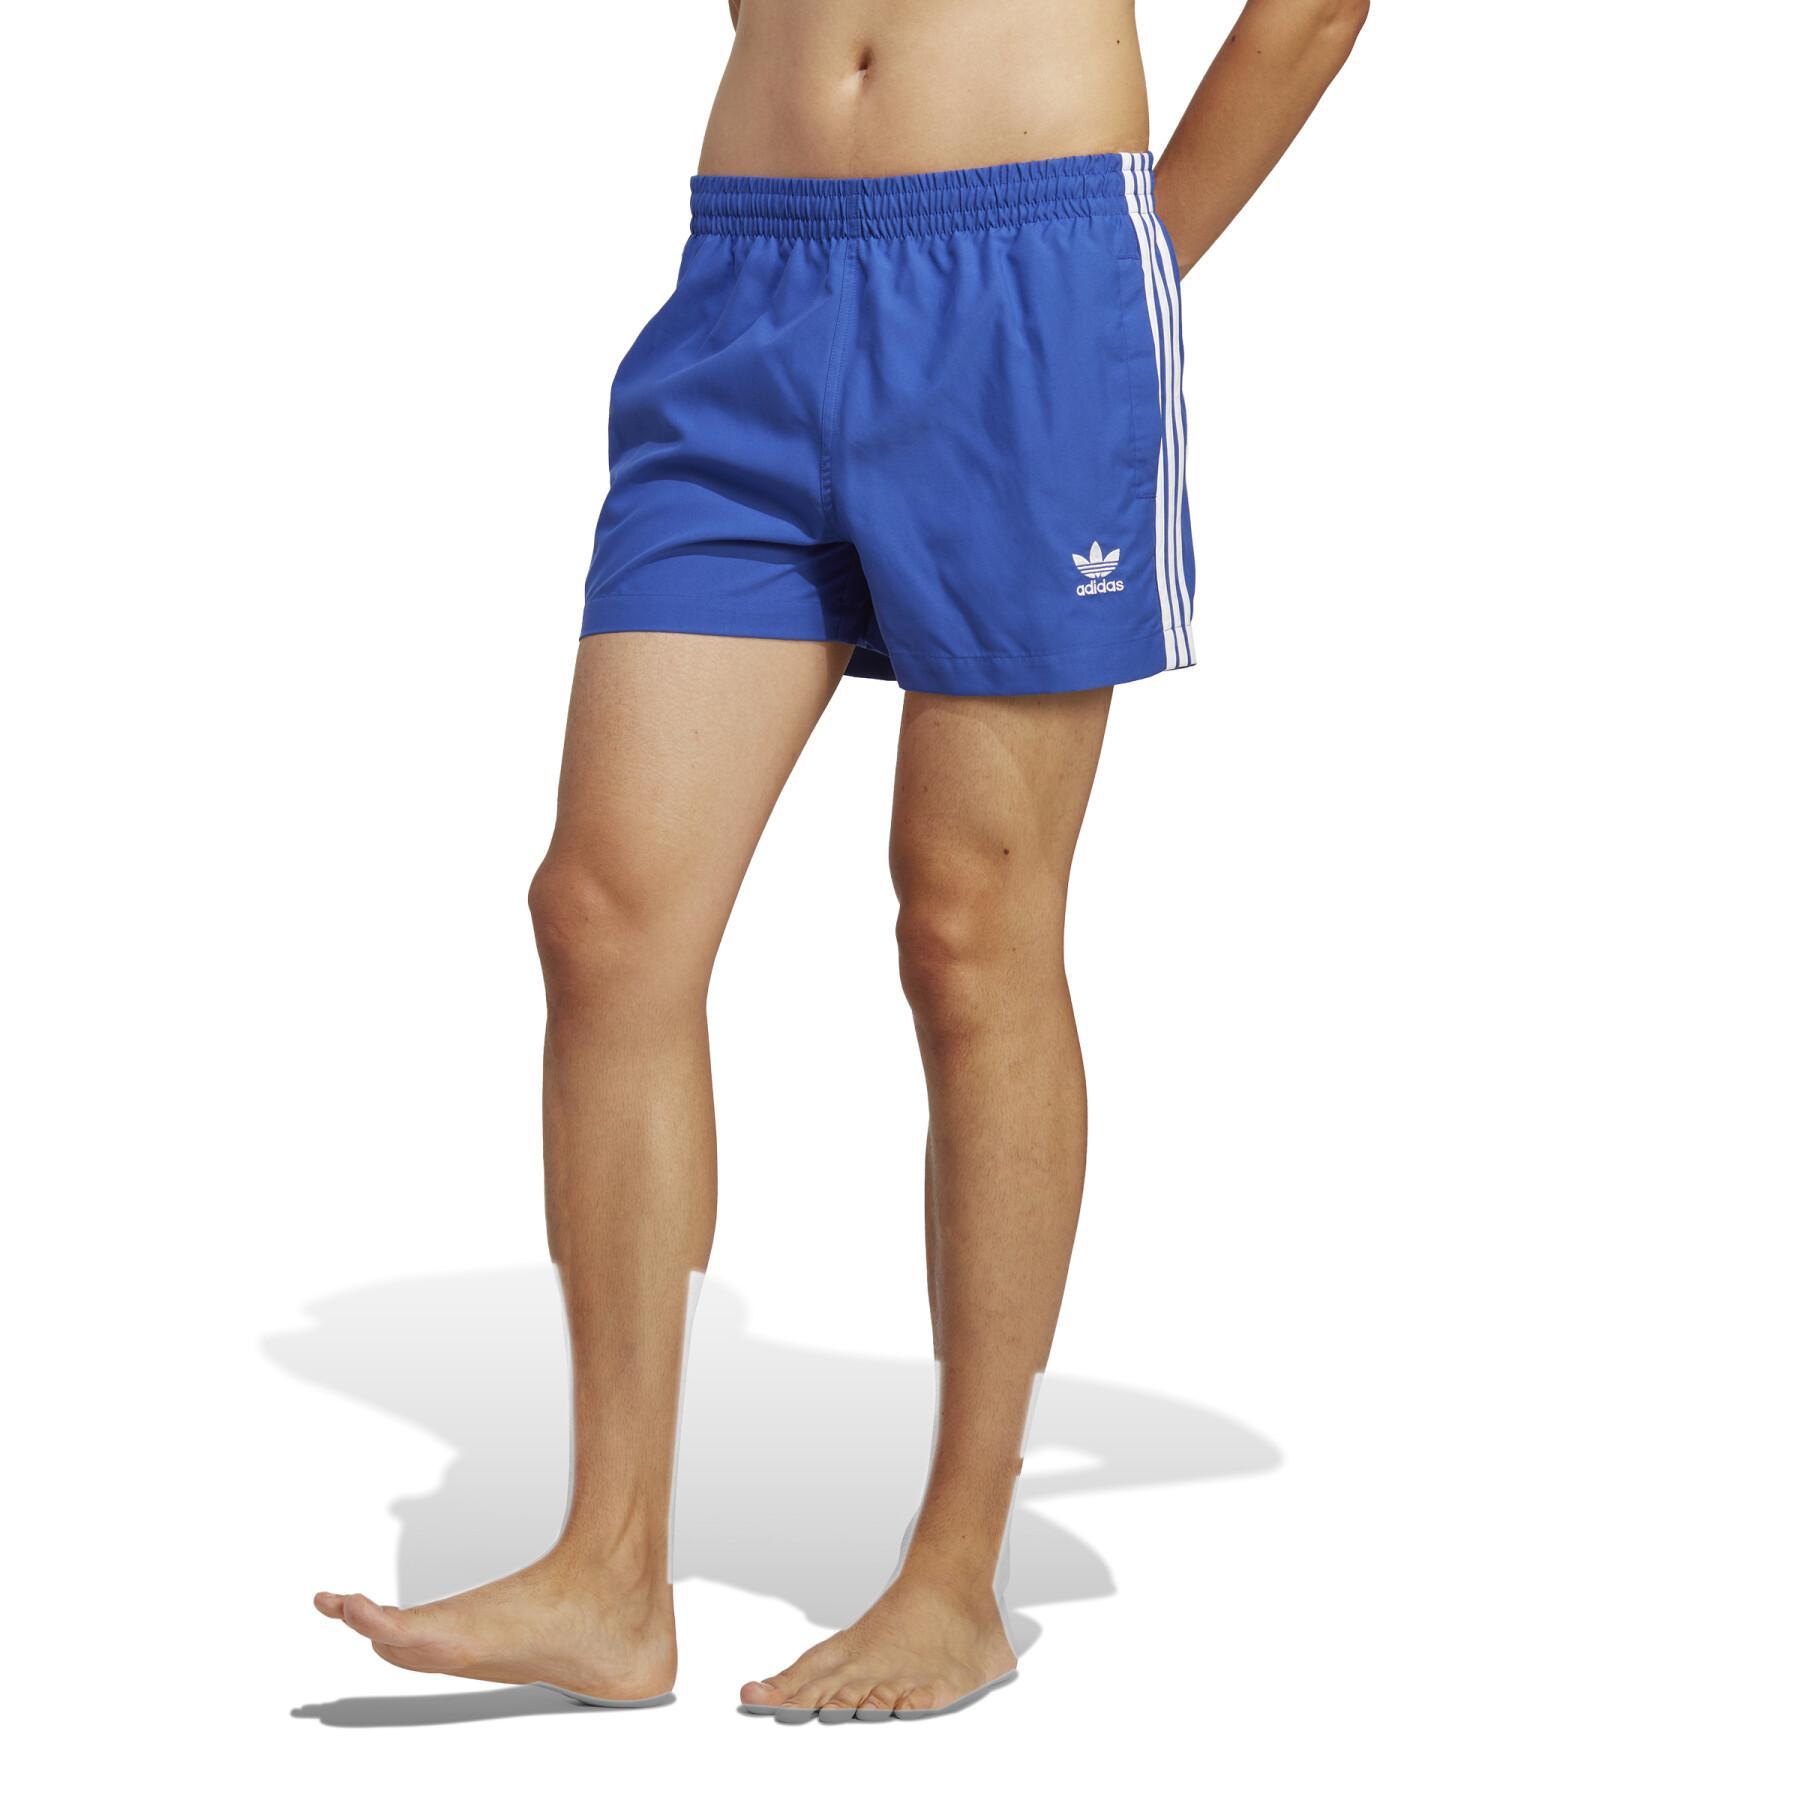 Short swim shorts with 3 stripes adidas Originals Adicolor